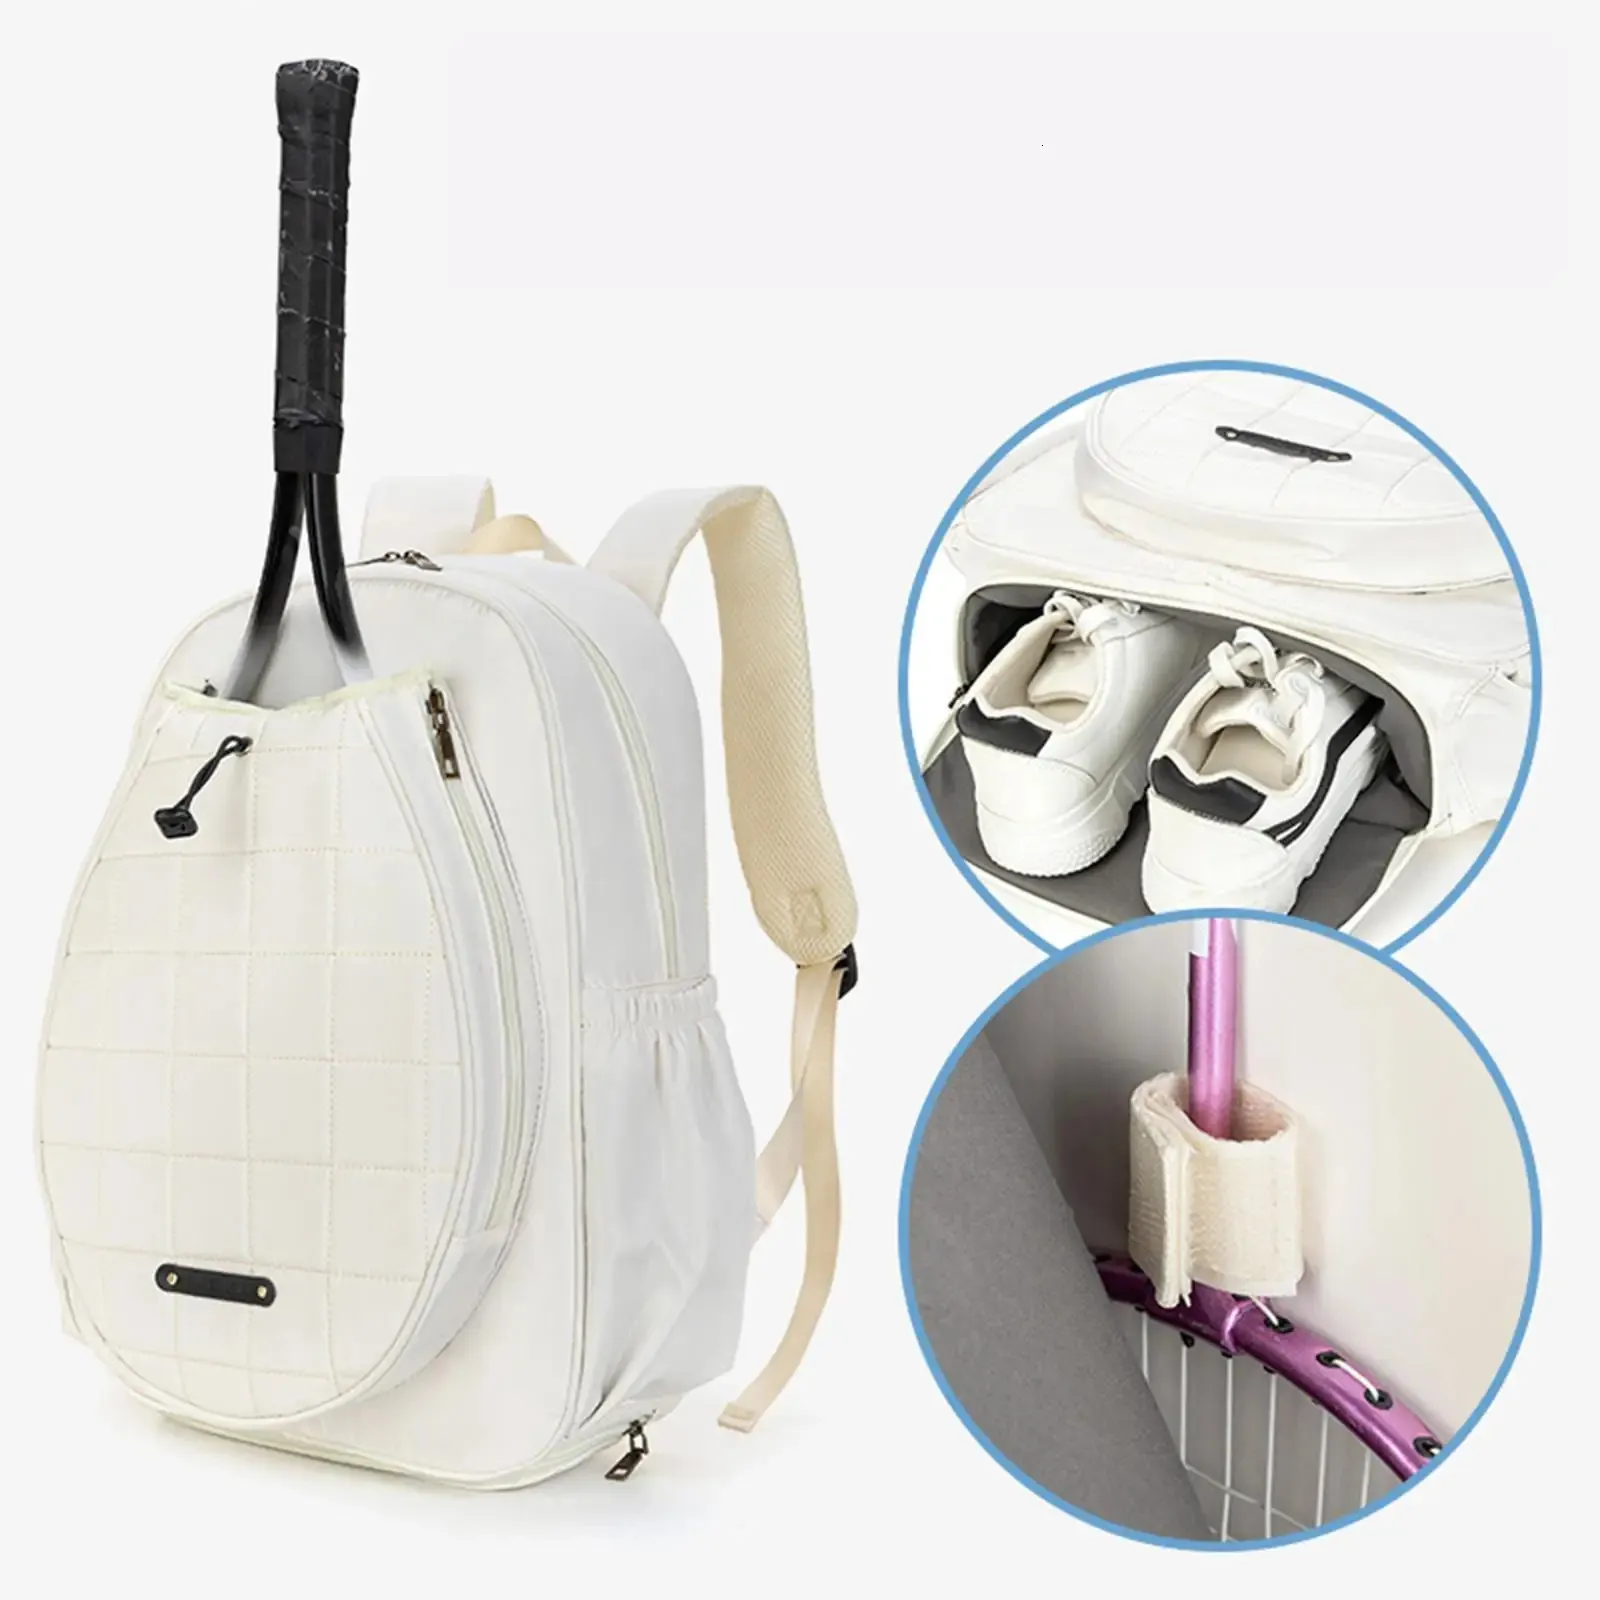 Tennis Backpack Tennis Bag Racket Holder for Squash Racquet Tennis Racket